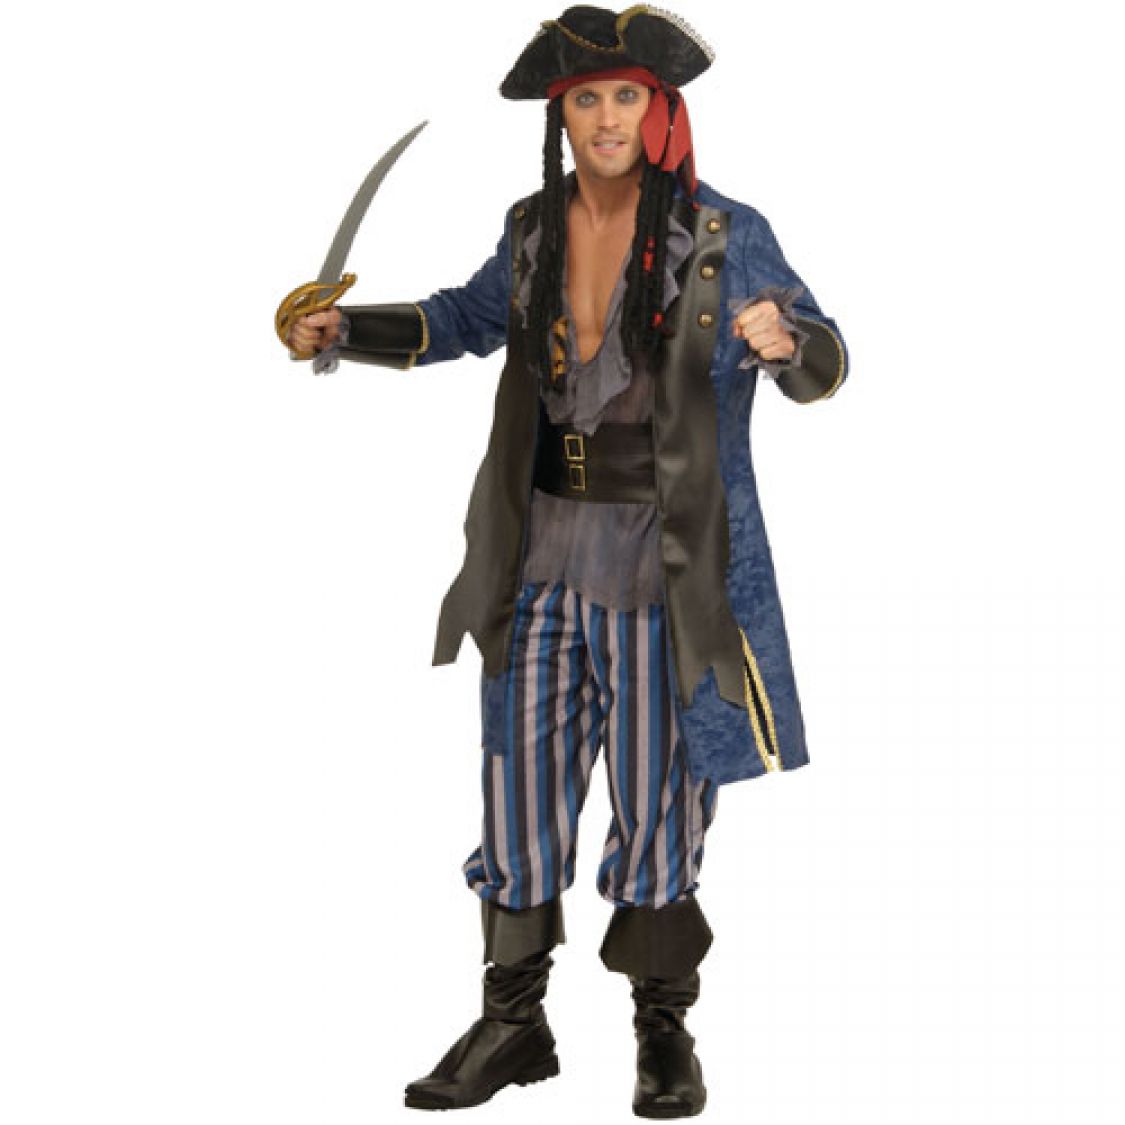 Déguisement Capitaine Pirate homme